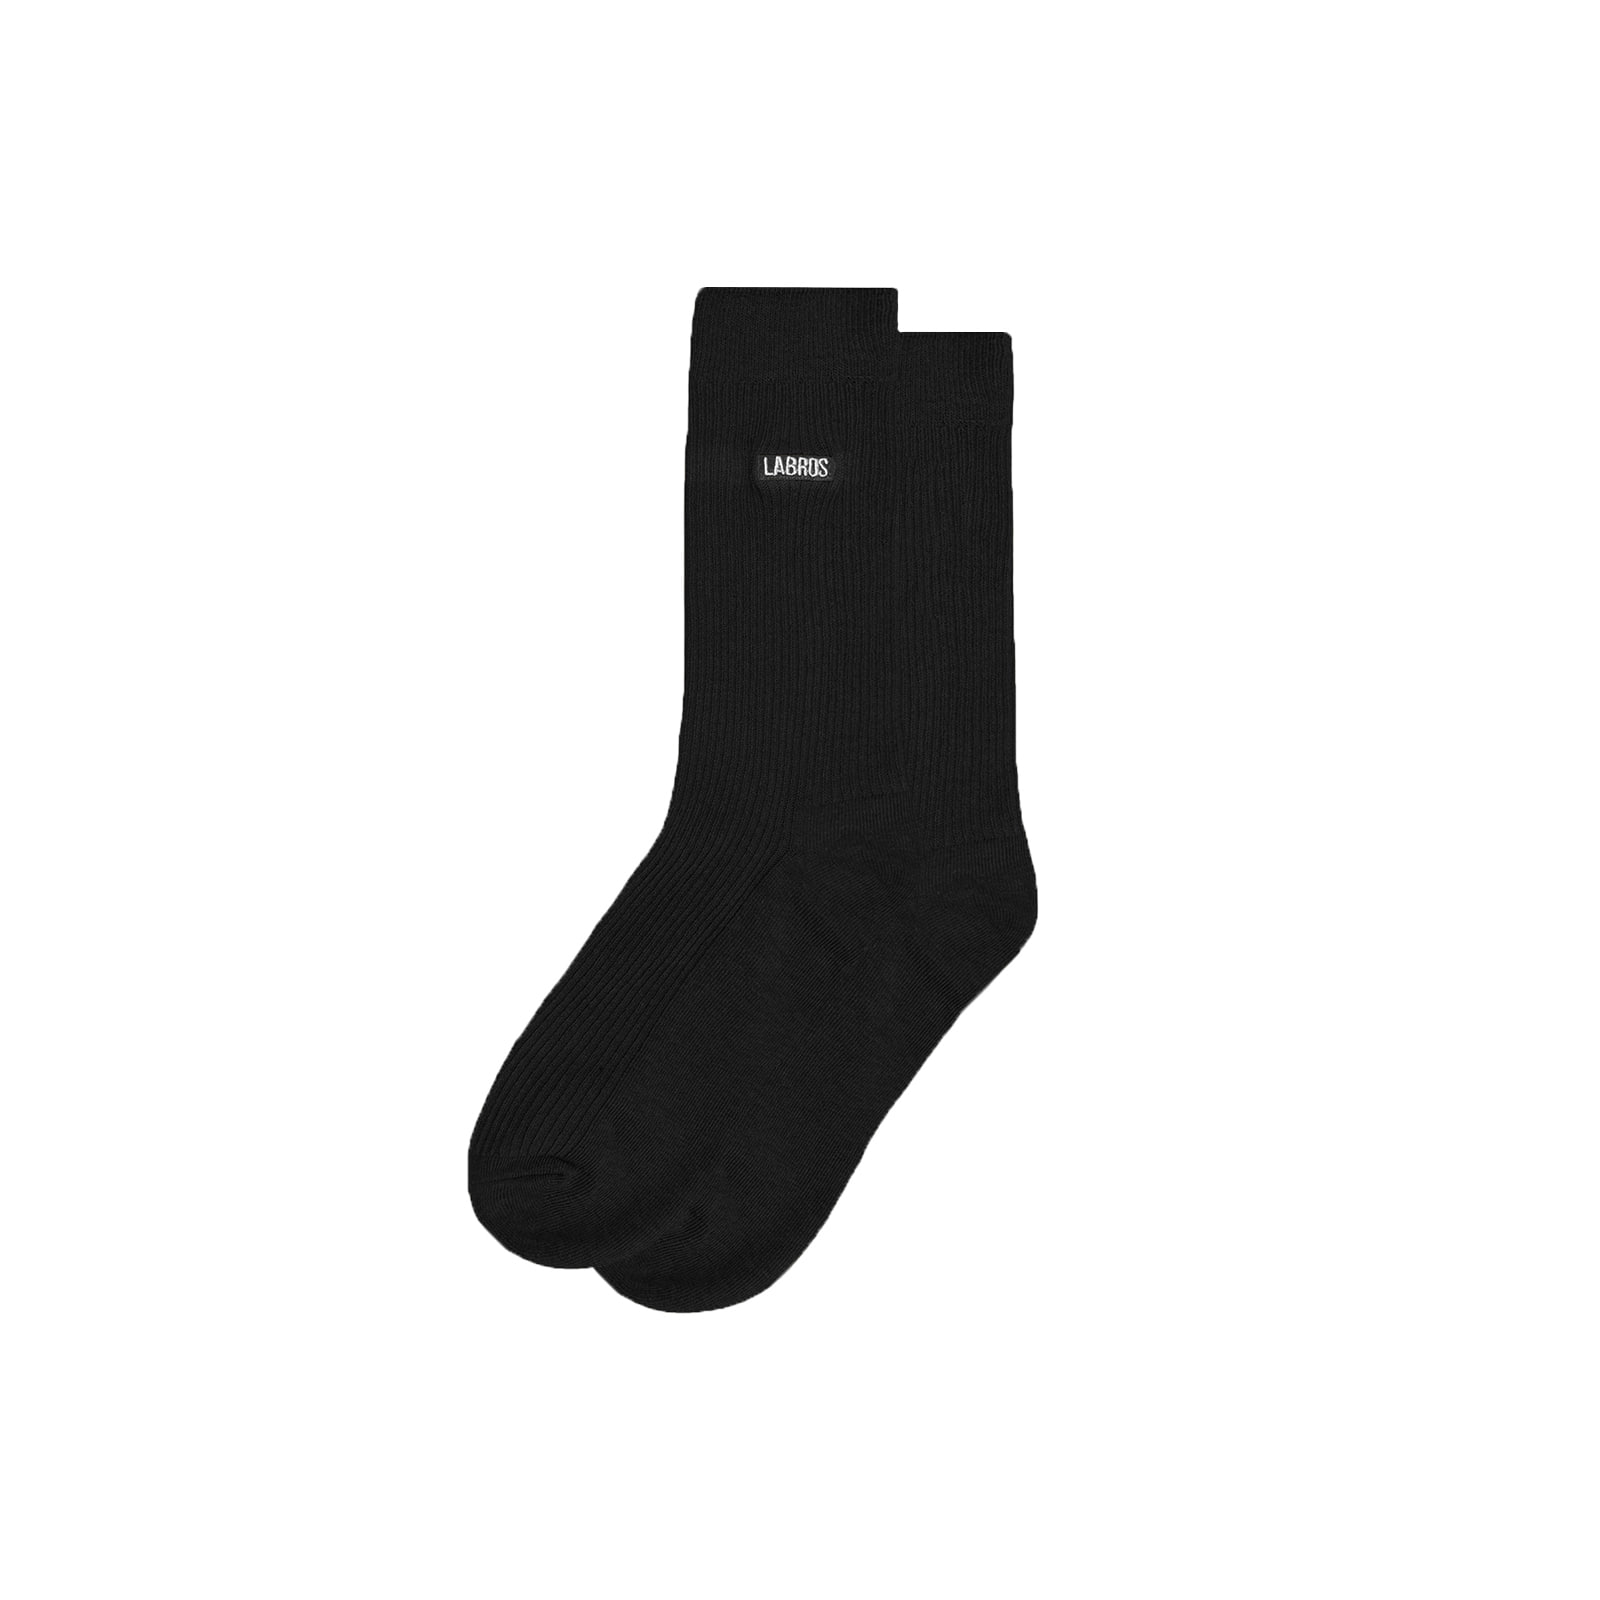 Box Logo Socks (Black)